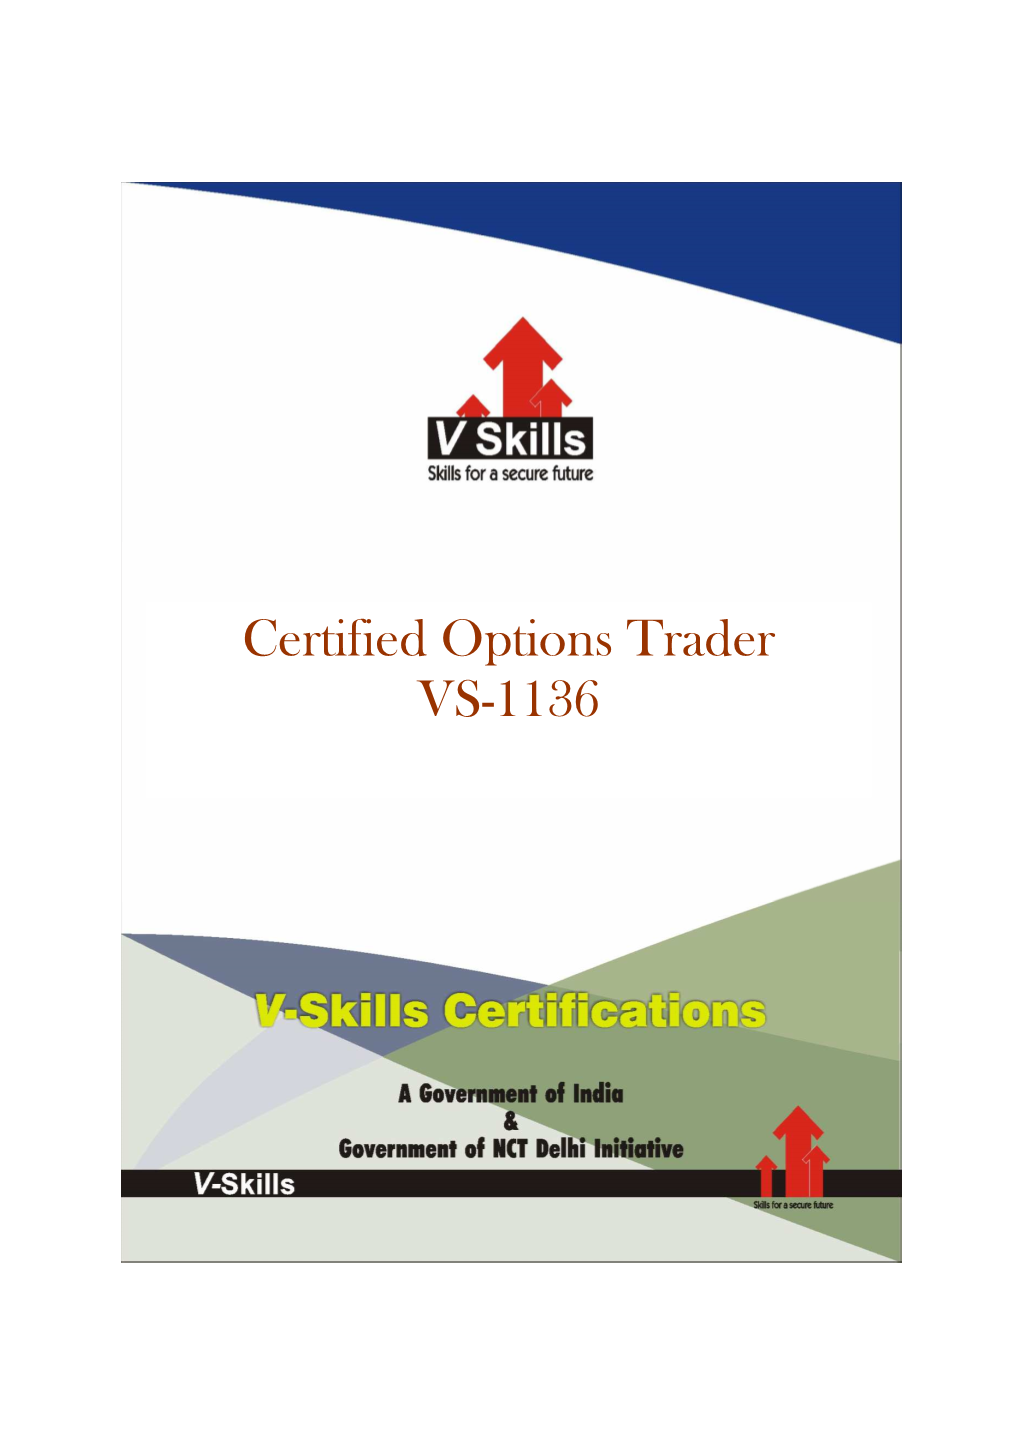 VS-1136 Certified Options Trader Brochure